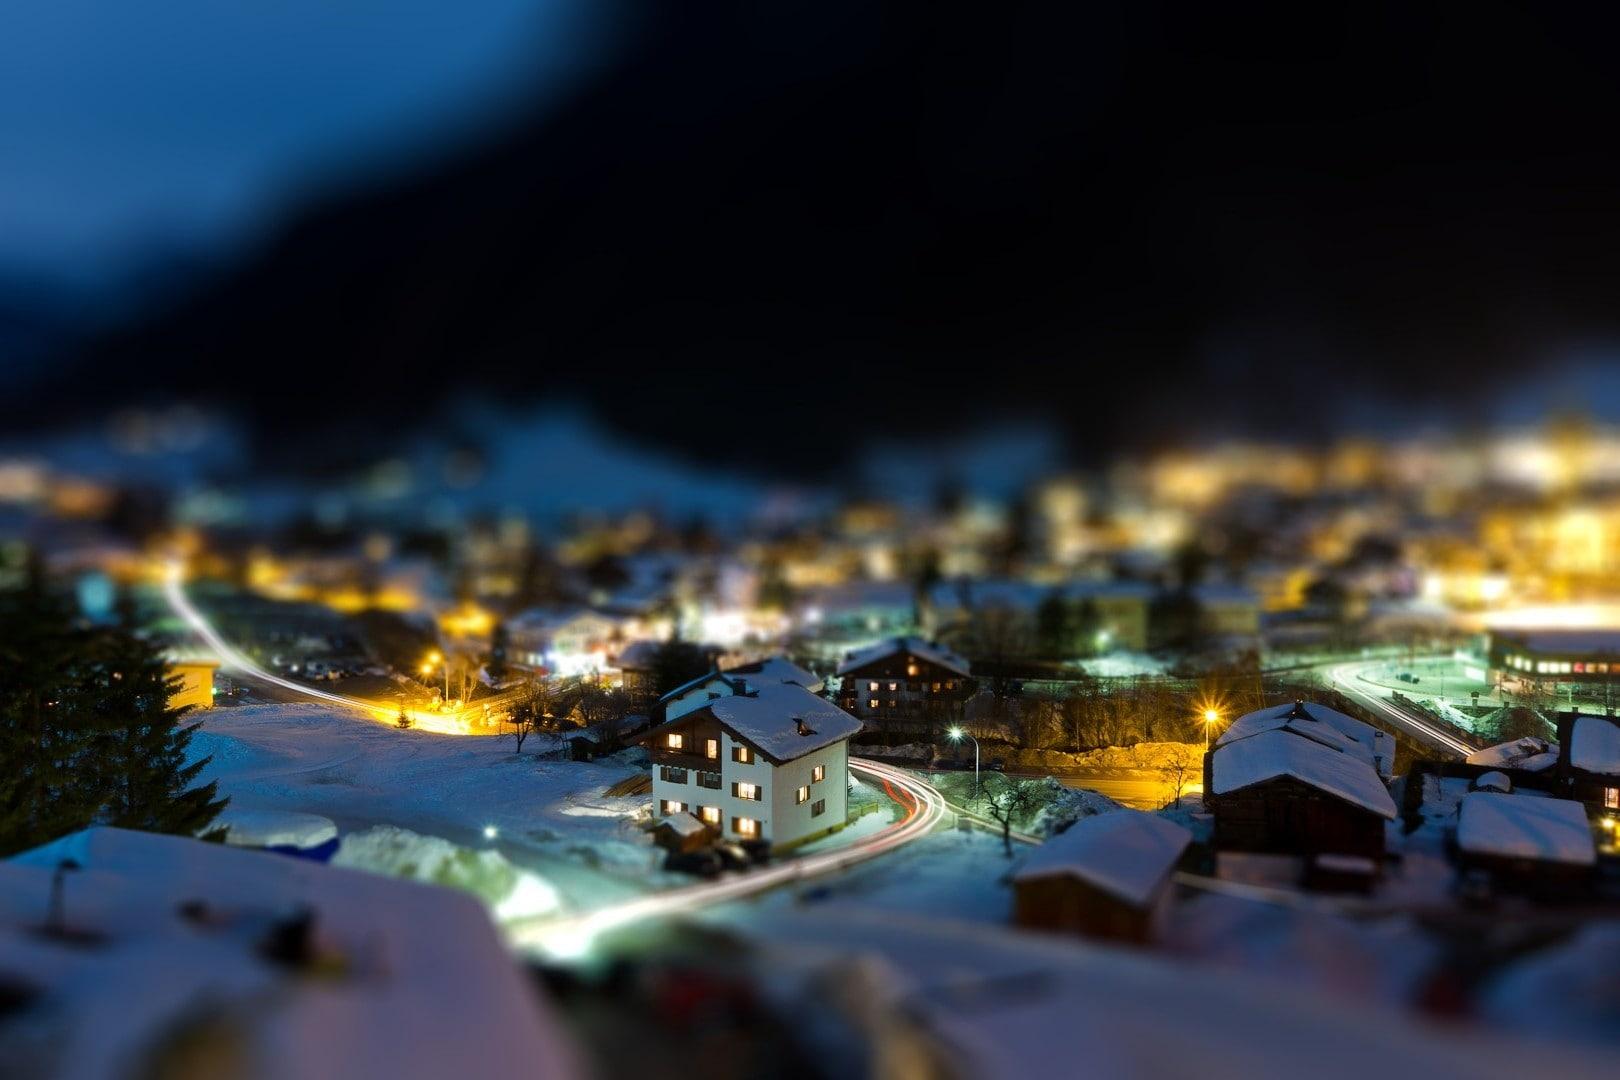 Winter Night In Town HD wallpaper free download